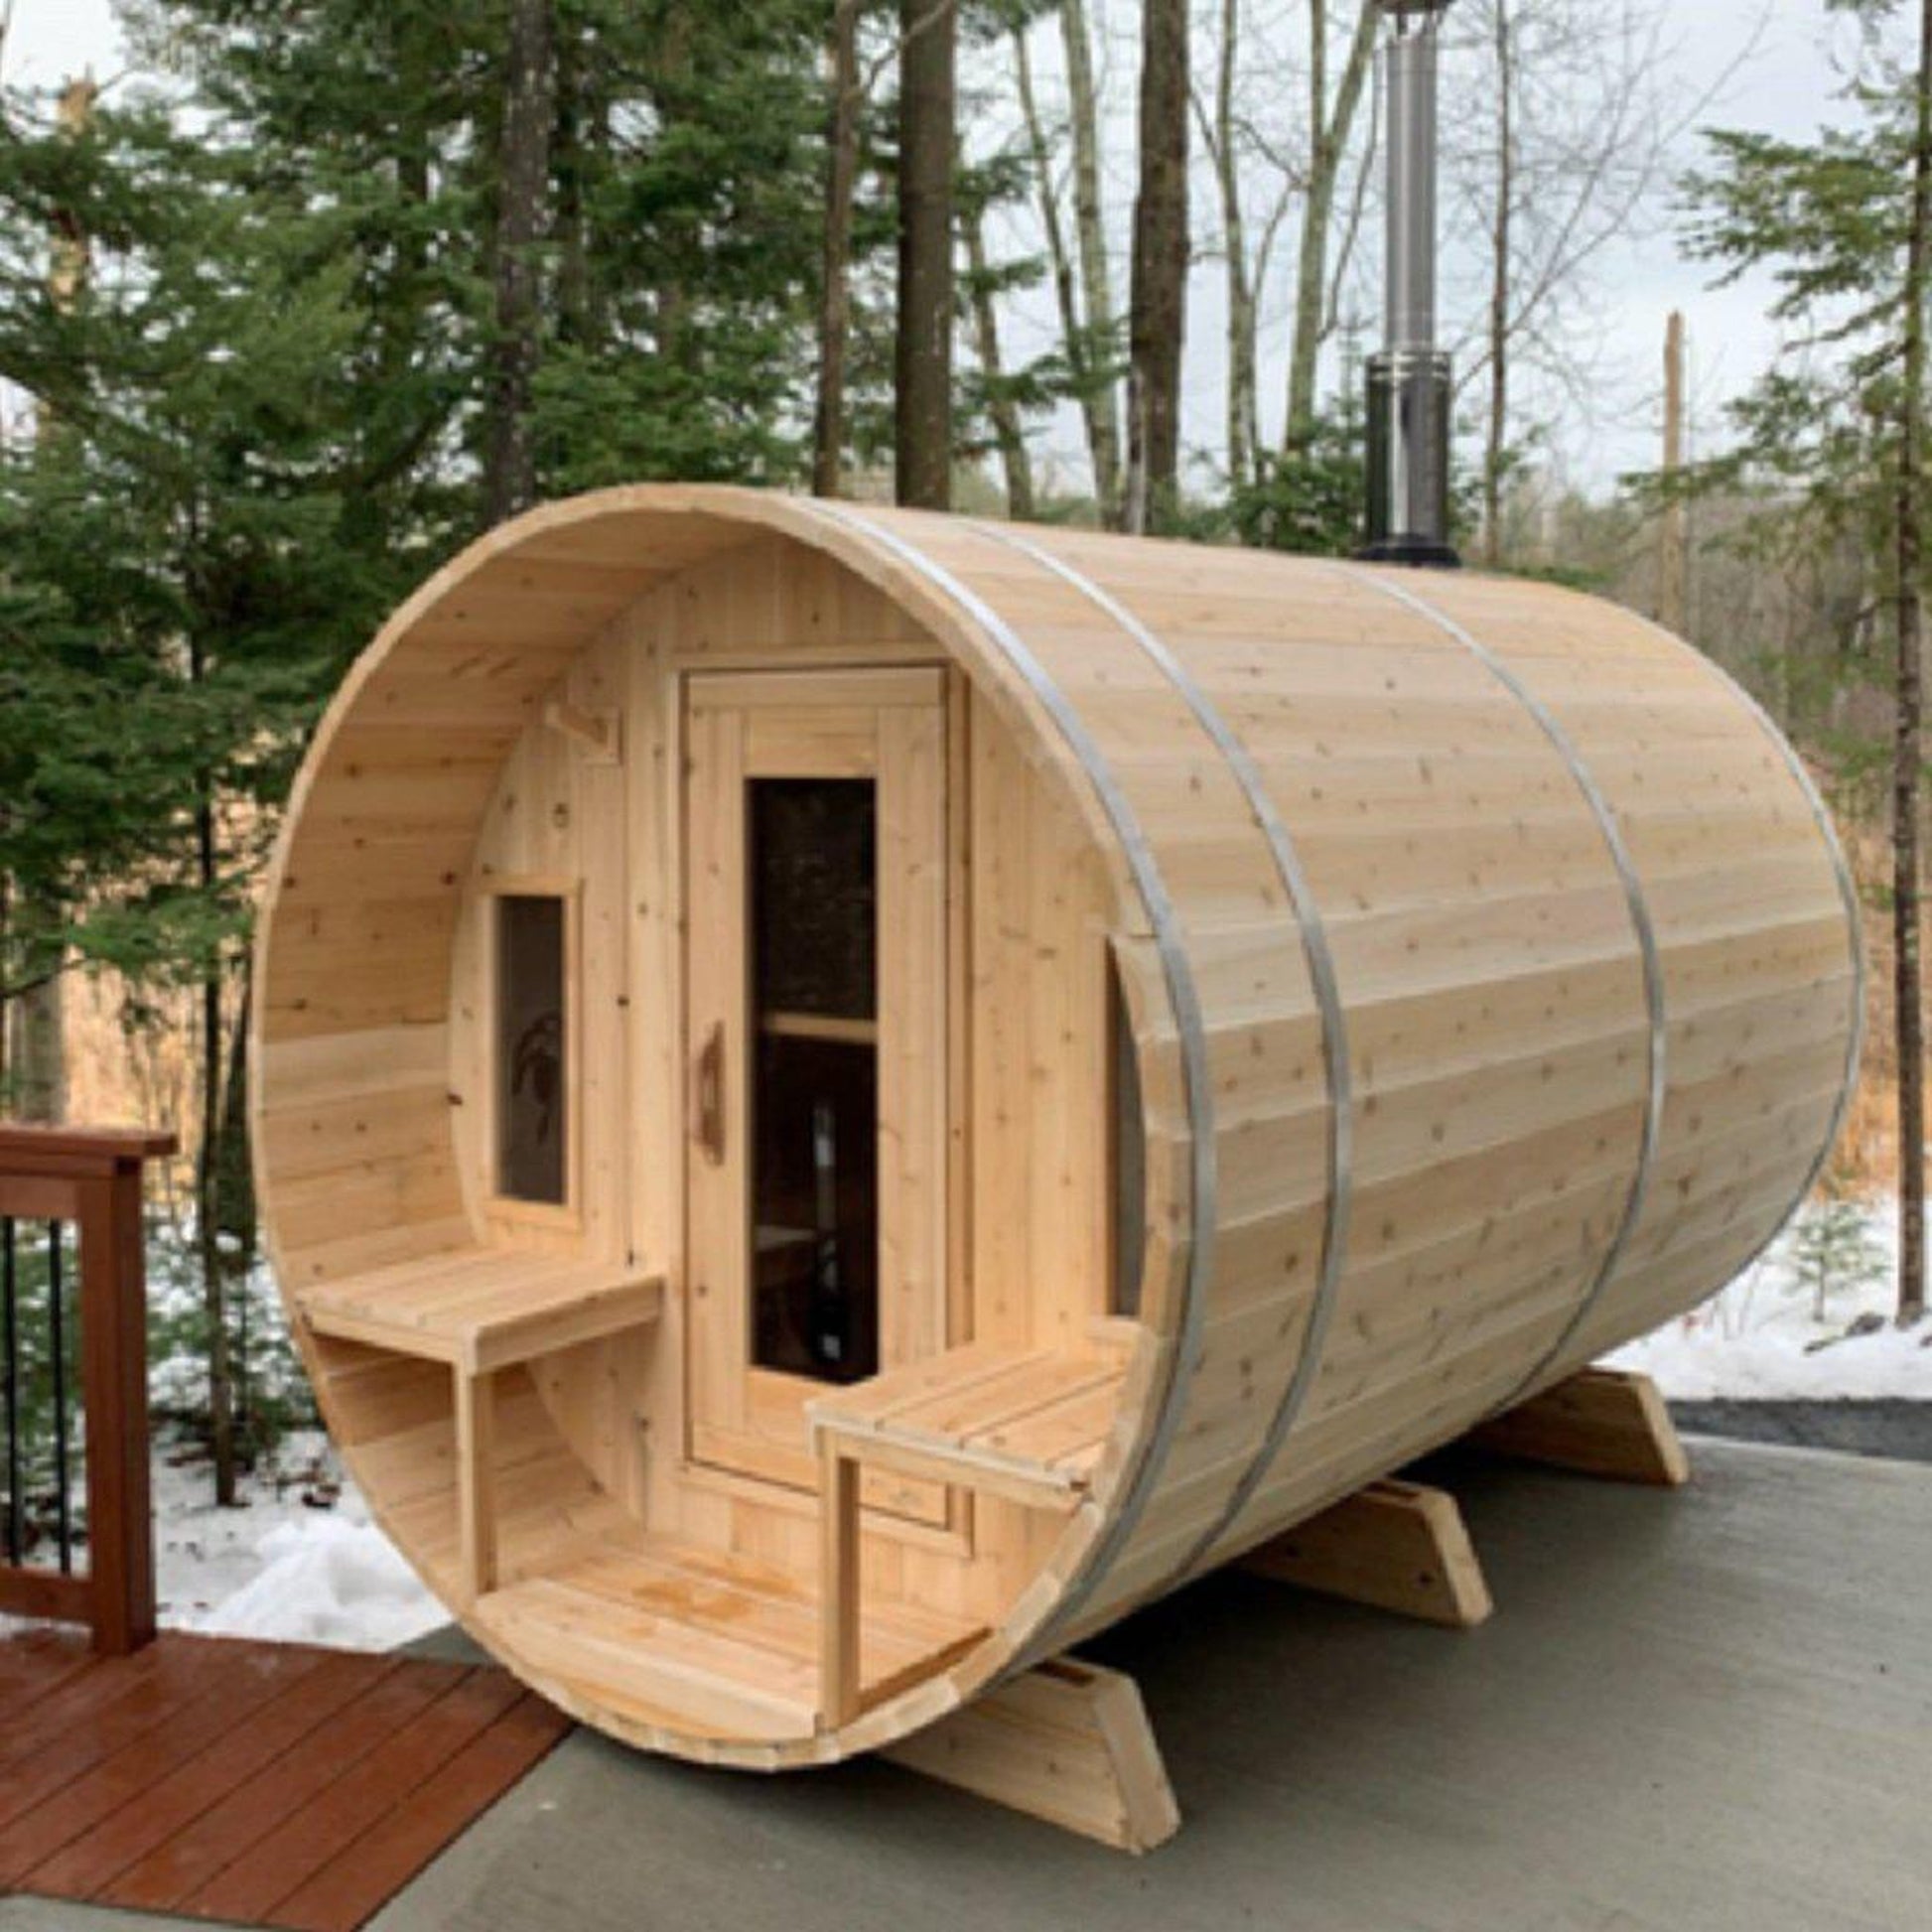 Dundalk LeisureCraft Canadian Timber Tranquility 2-6 Person White Cedar Outdoor Barrel Sauna